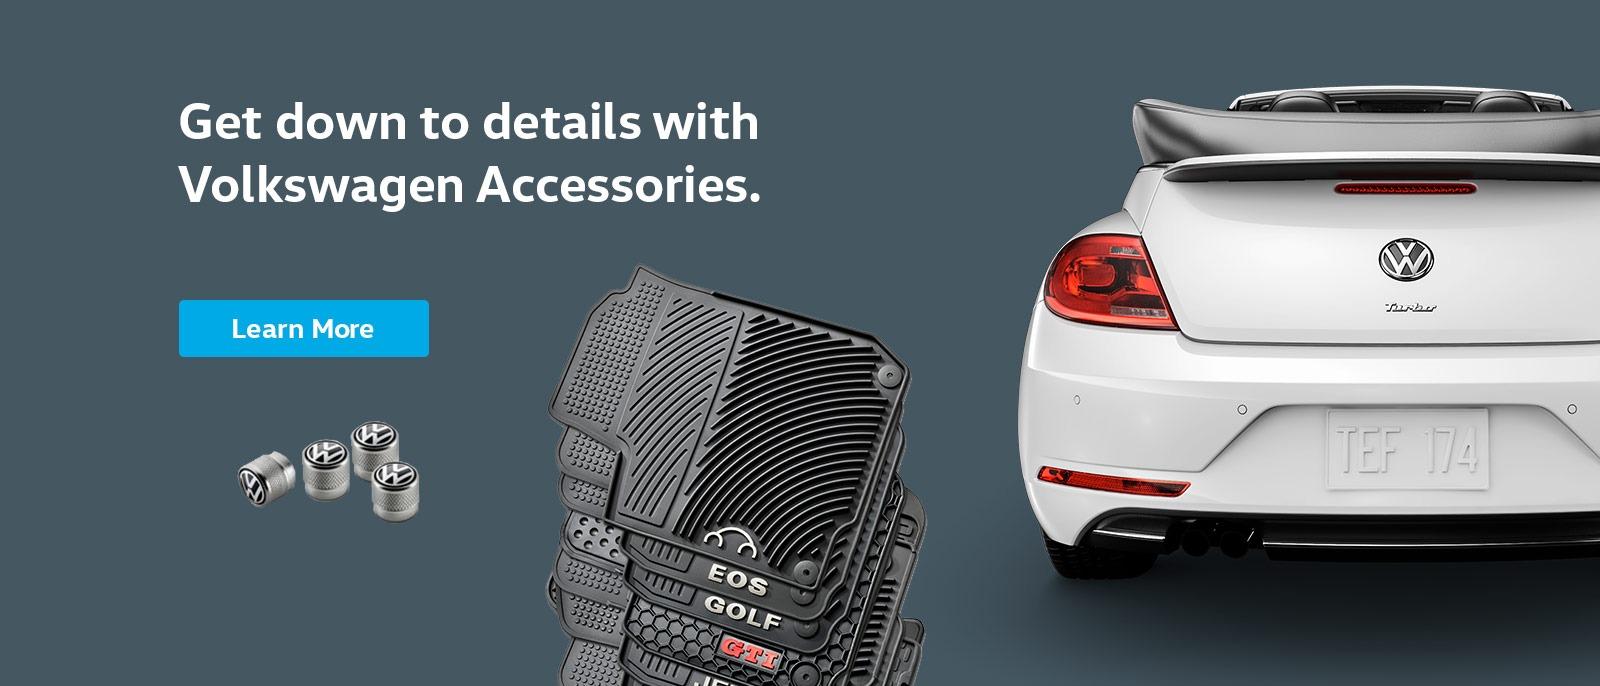 Get down to details with Volkswagen Accessories